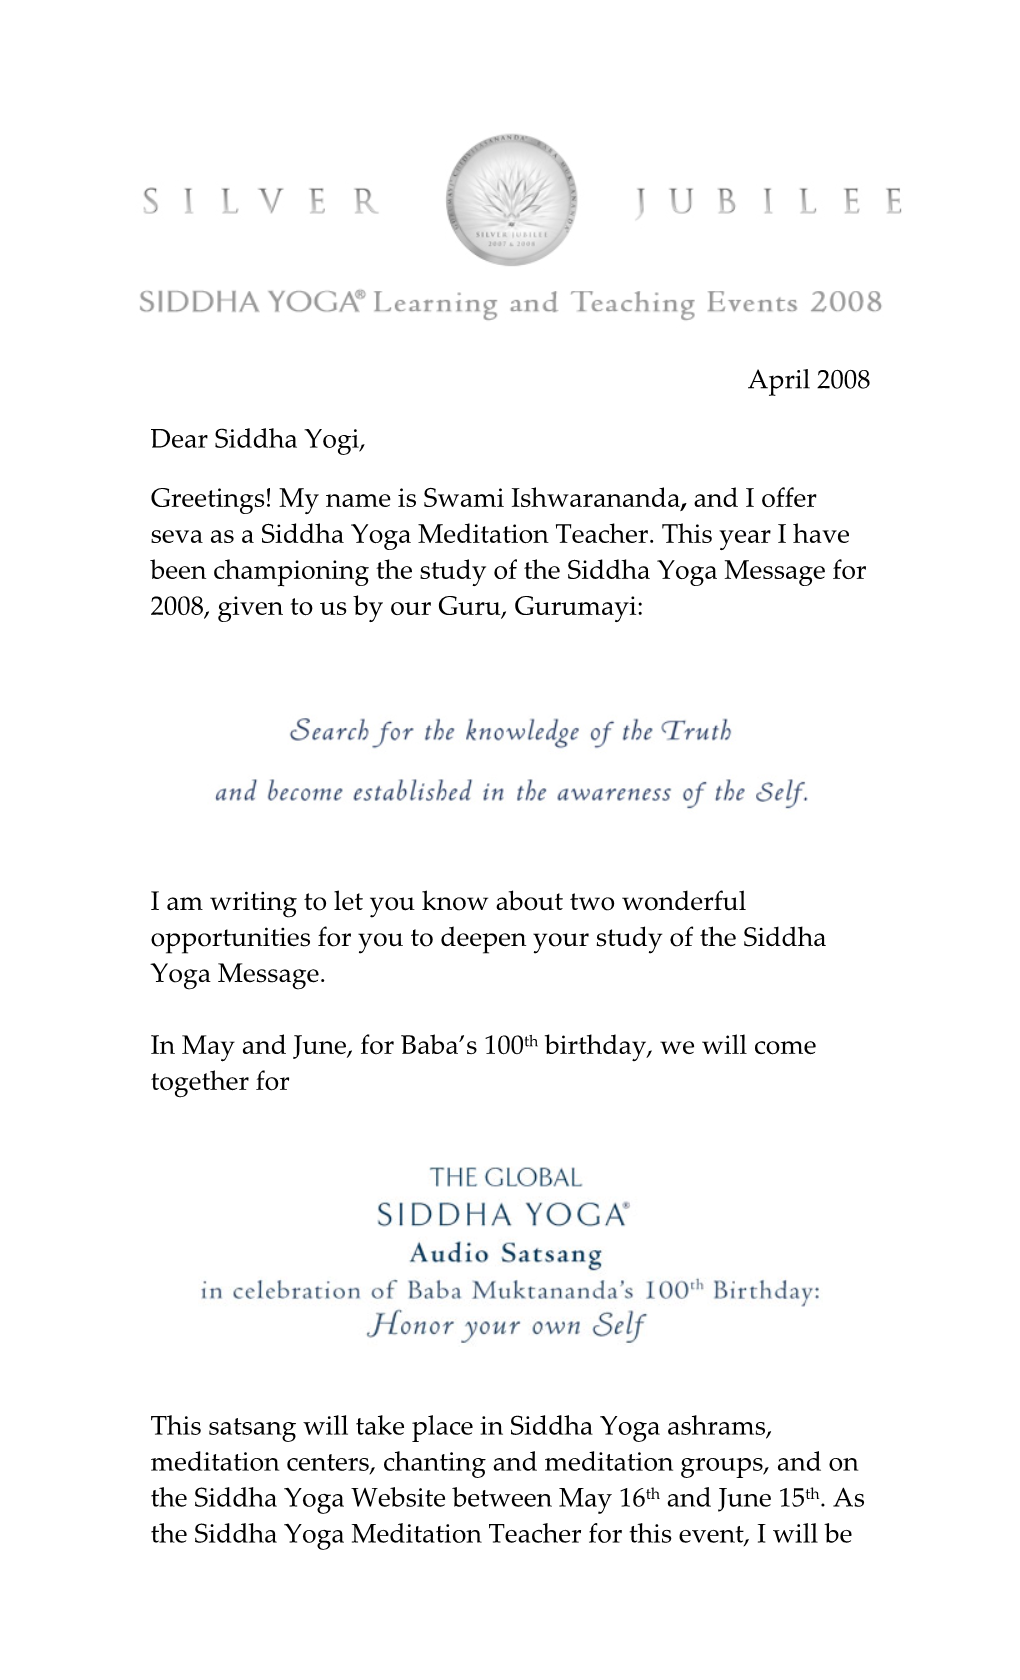 My Name Is Swami Ishwarananda, and I Offer Seva As a Siddha Yoga Meditation Teacher